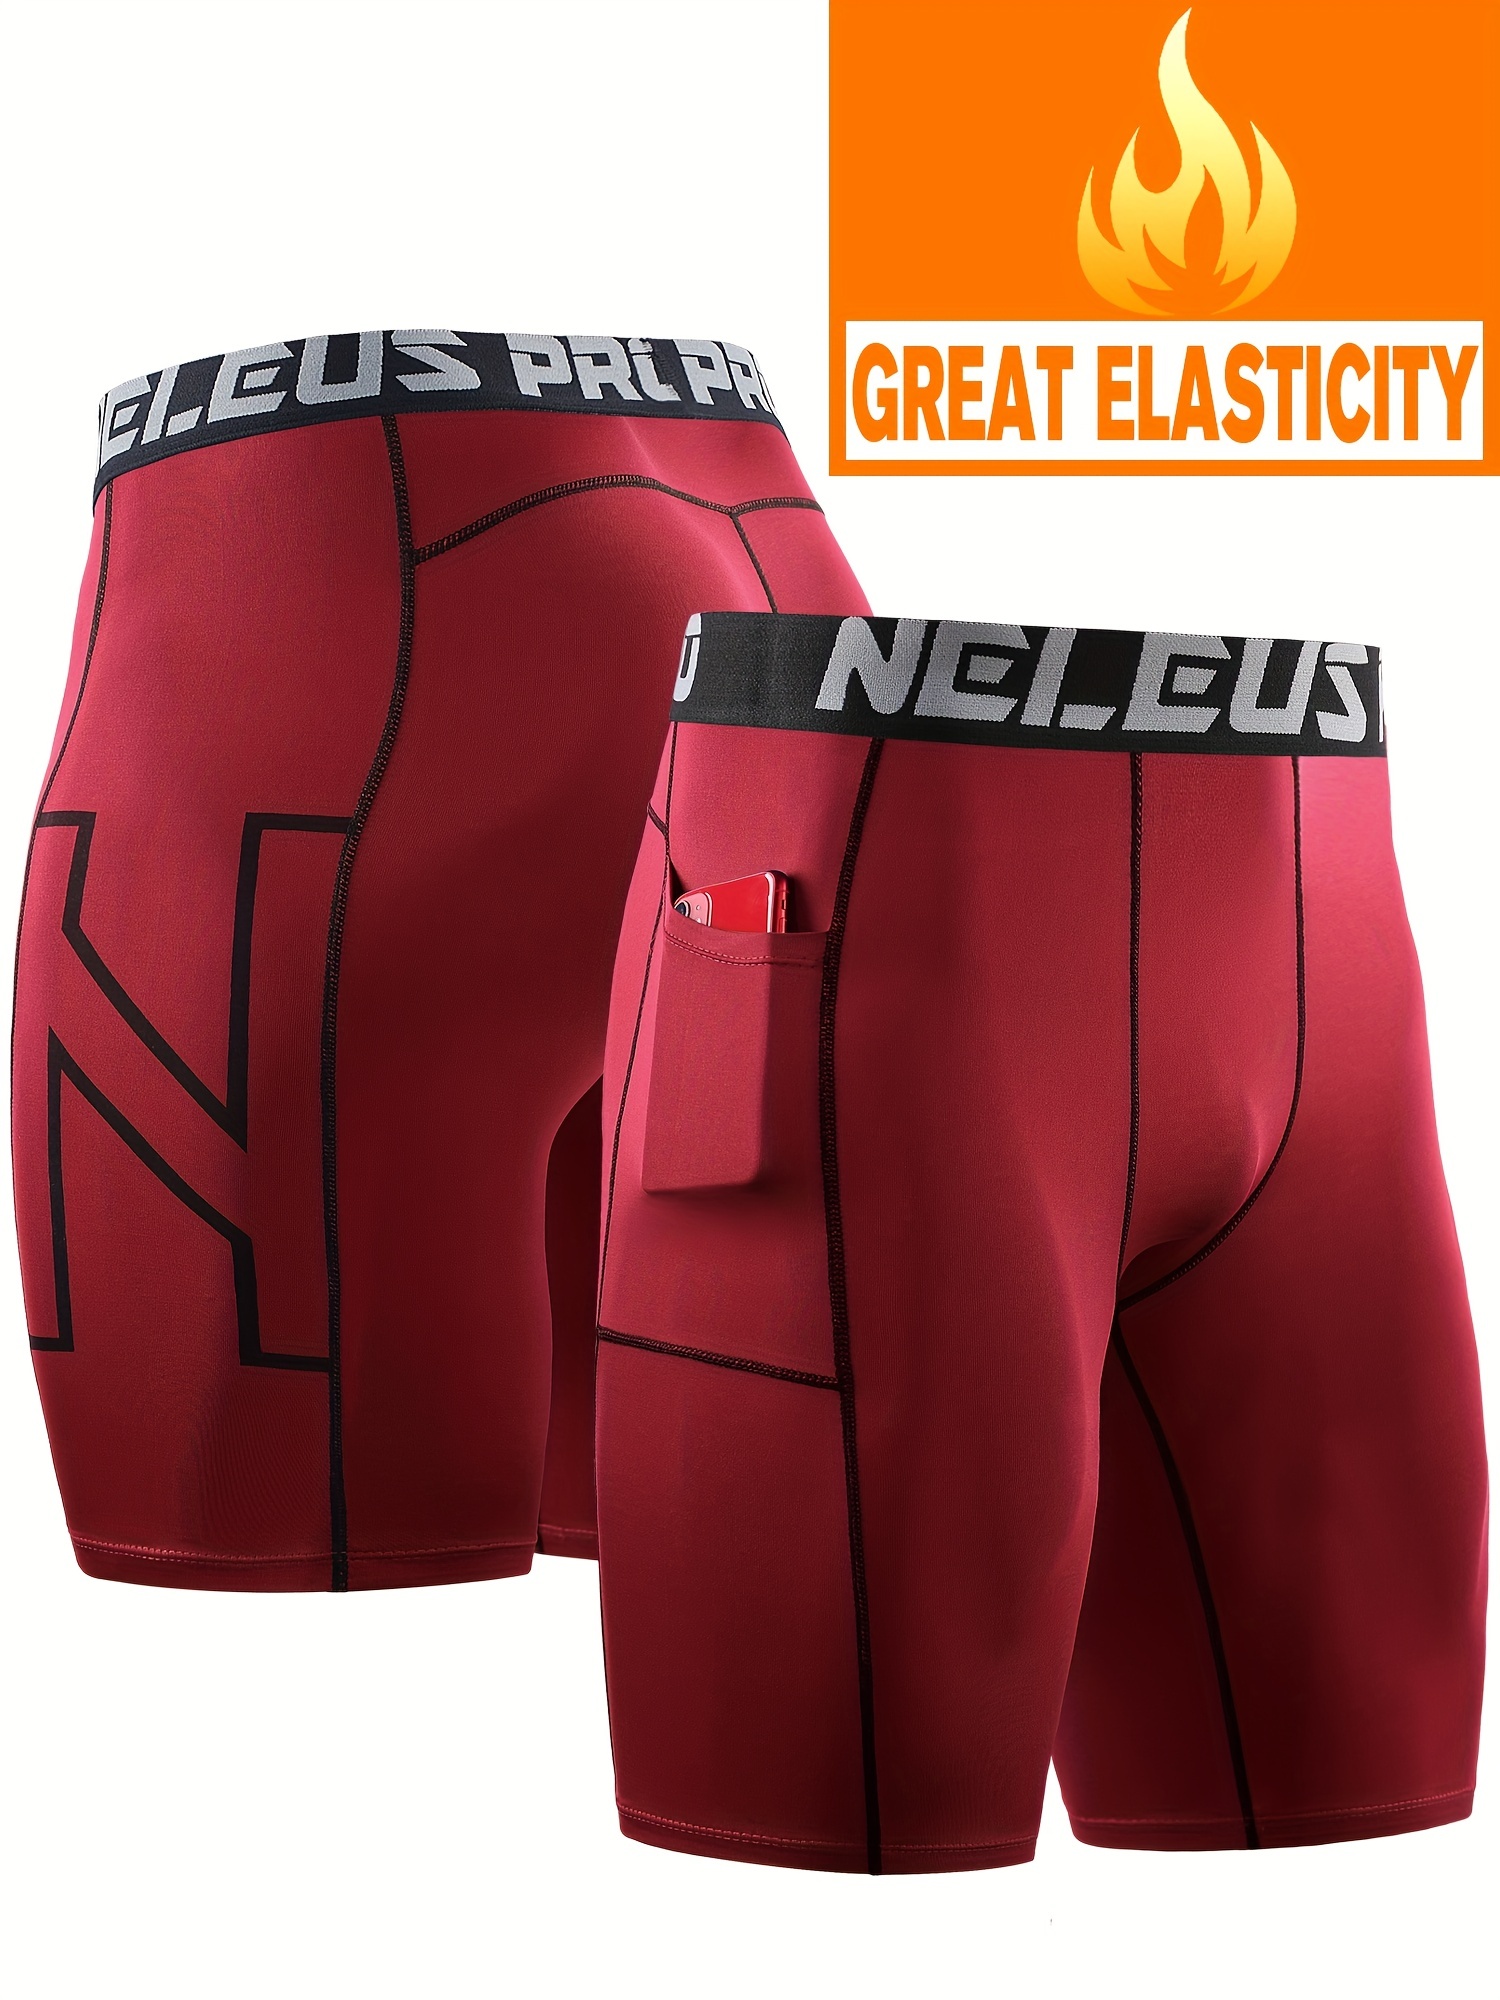  NELEUS: Compression Shorts